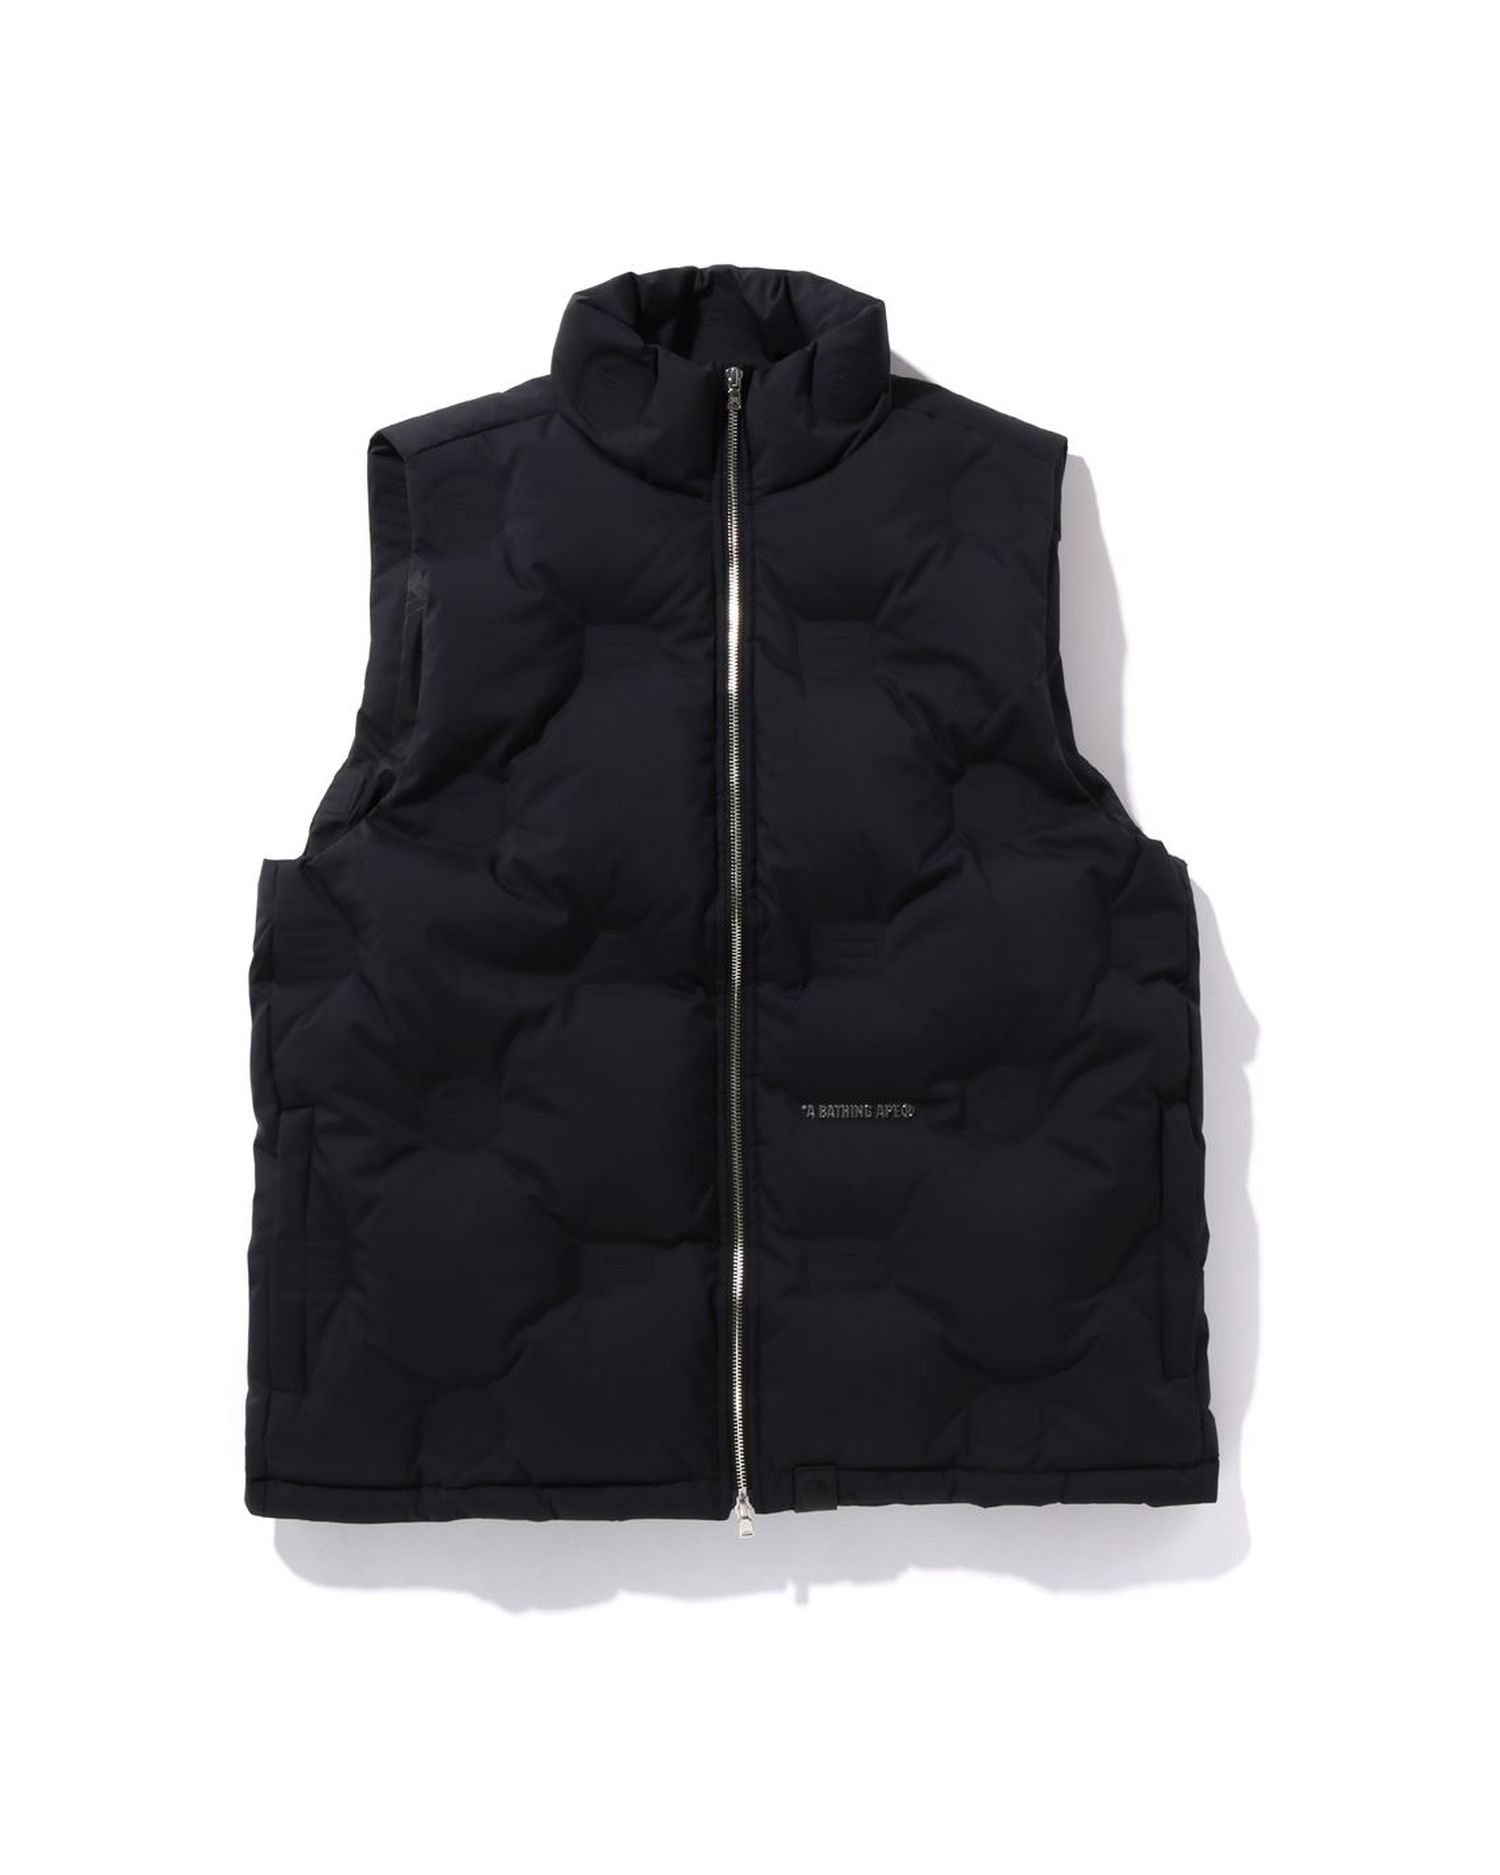 Shop Tonal Solid Camo Puffer Down Jacket Online | BAPE